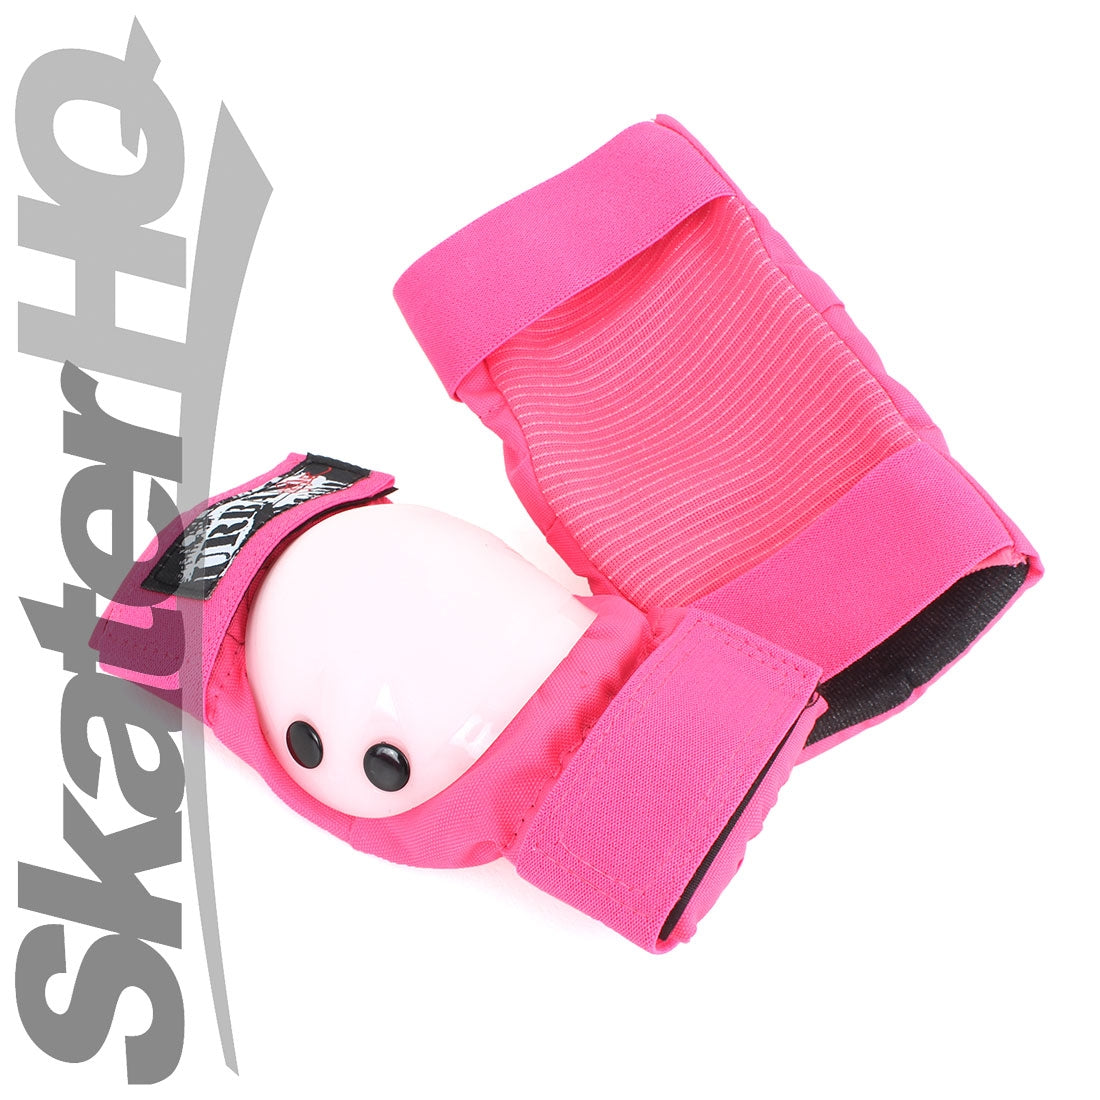 Urban Skater Tri Pack Pink - Medium Protective Gear